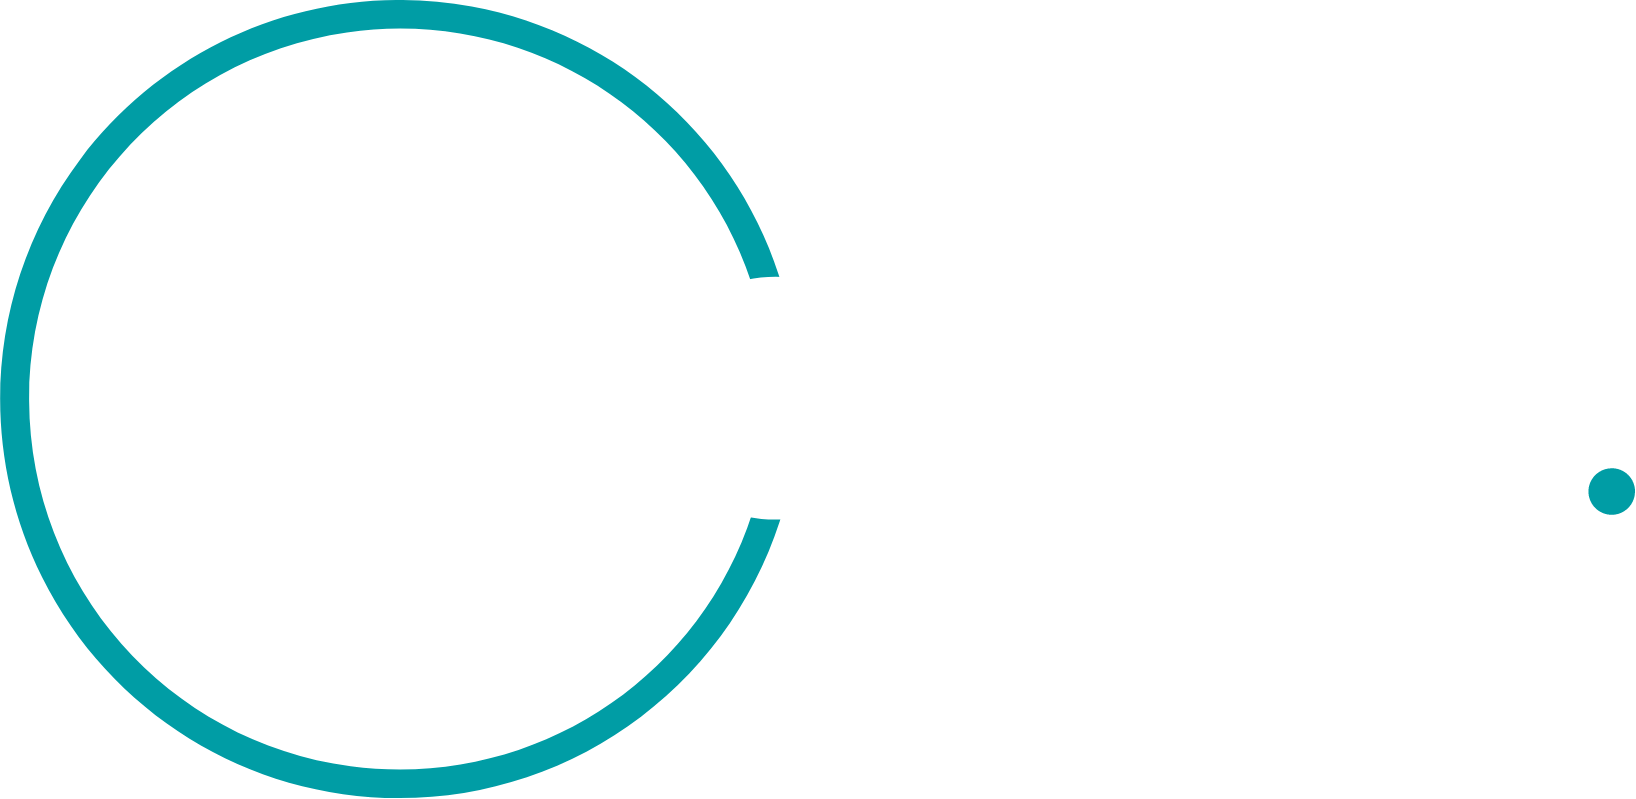 Planet Labs logo large for dark backgrounds (transparent PNG)